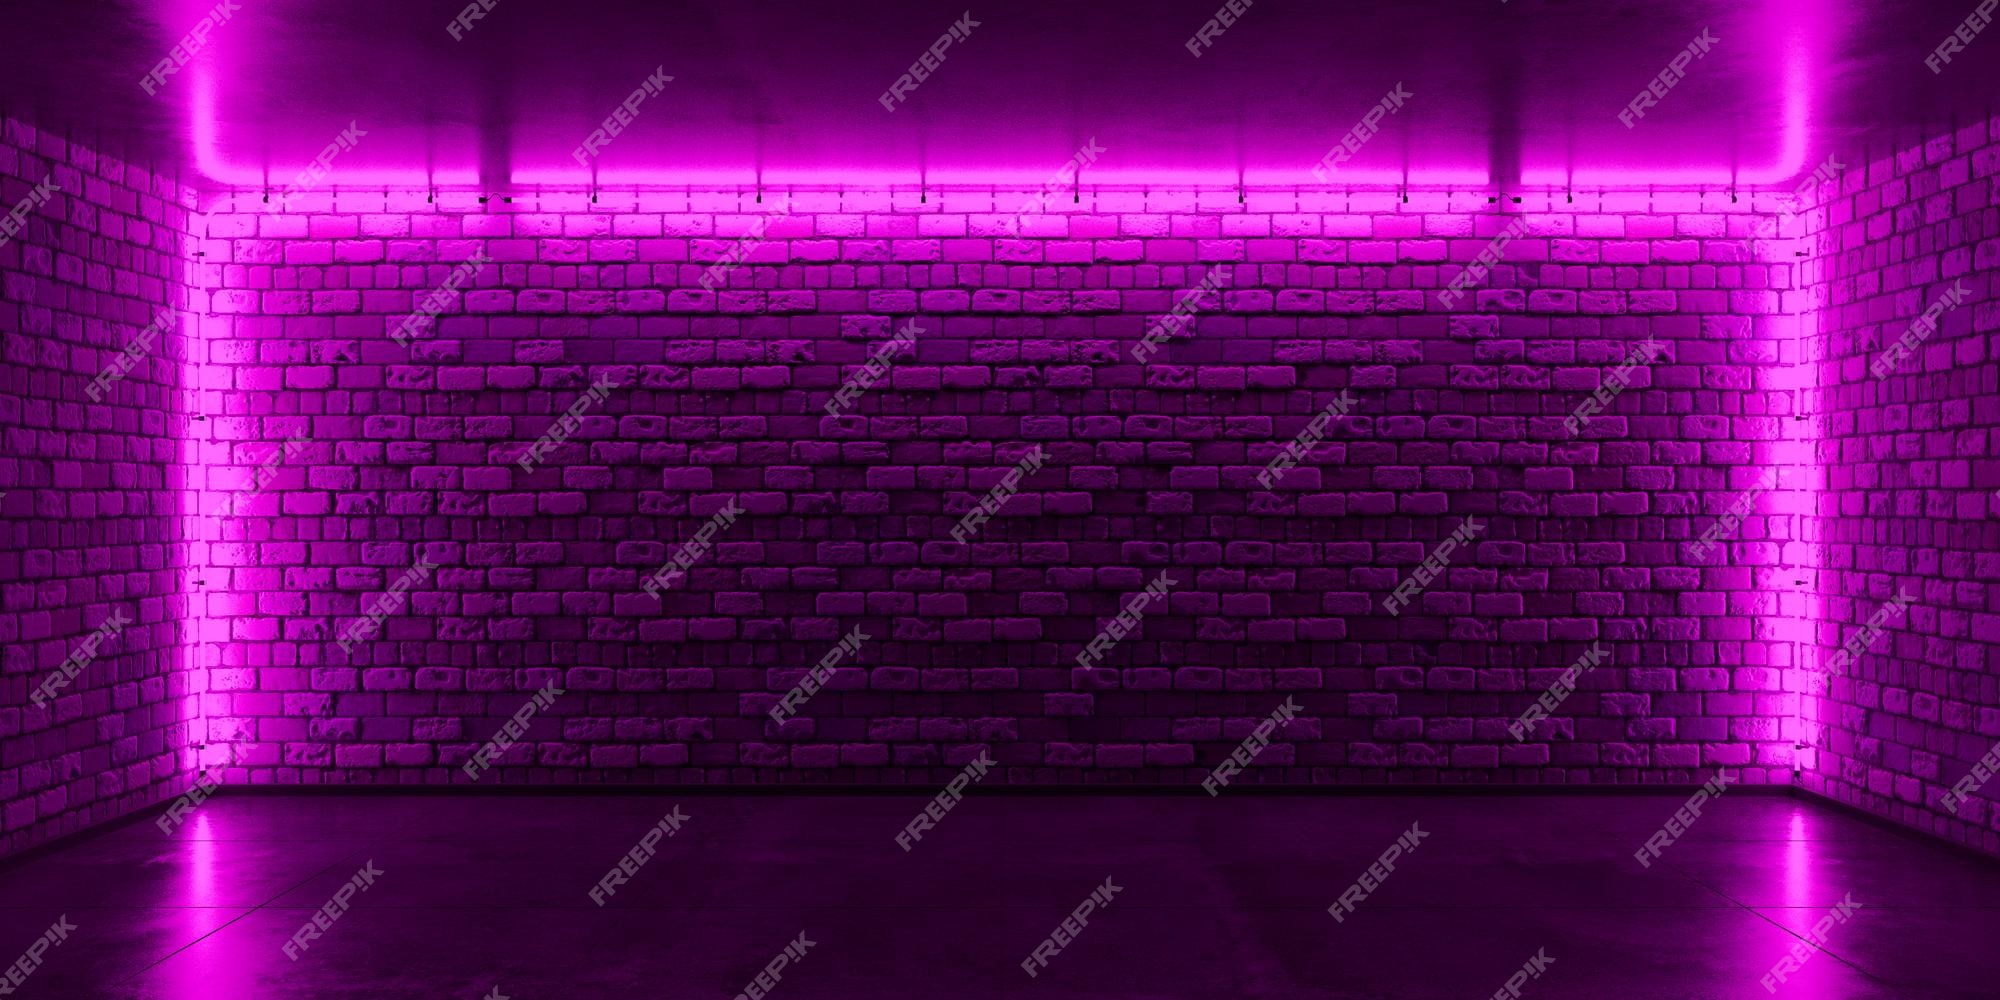 Premium Photo | Brick wall stage background pink neon light neon ...